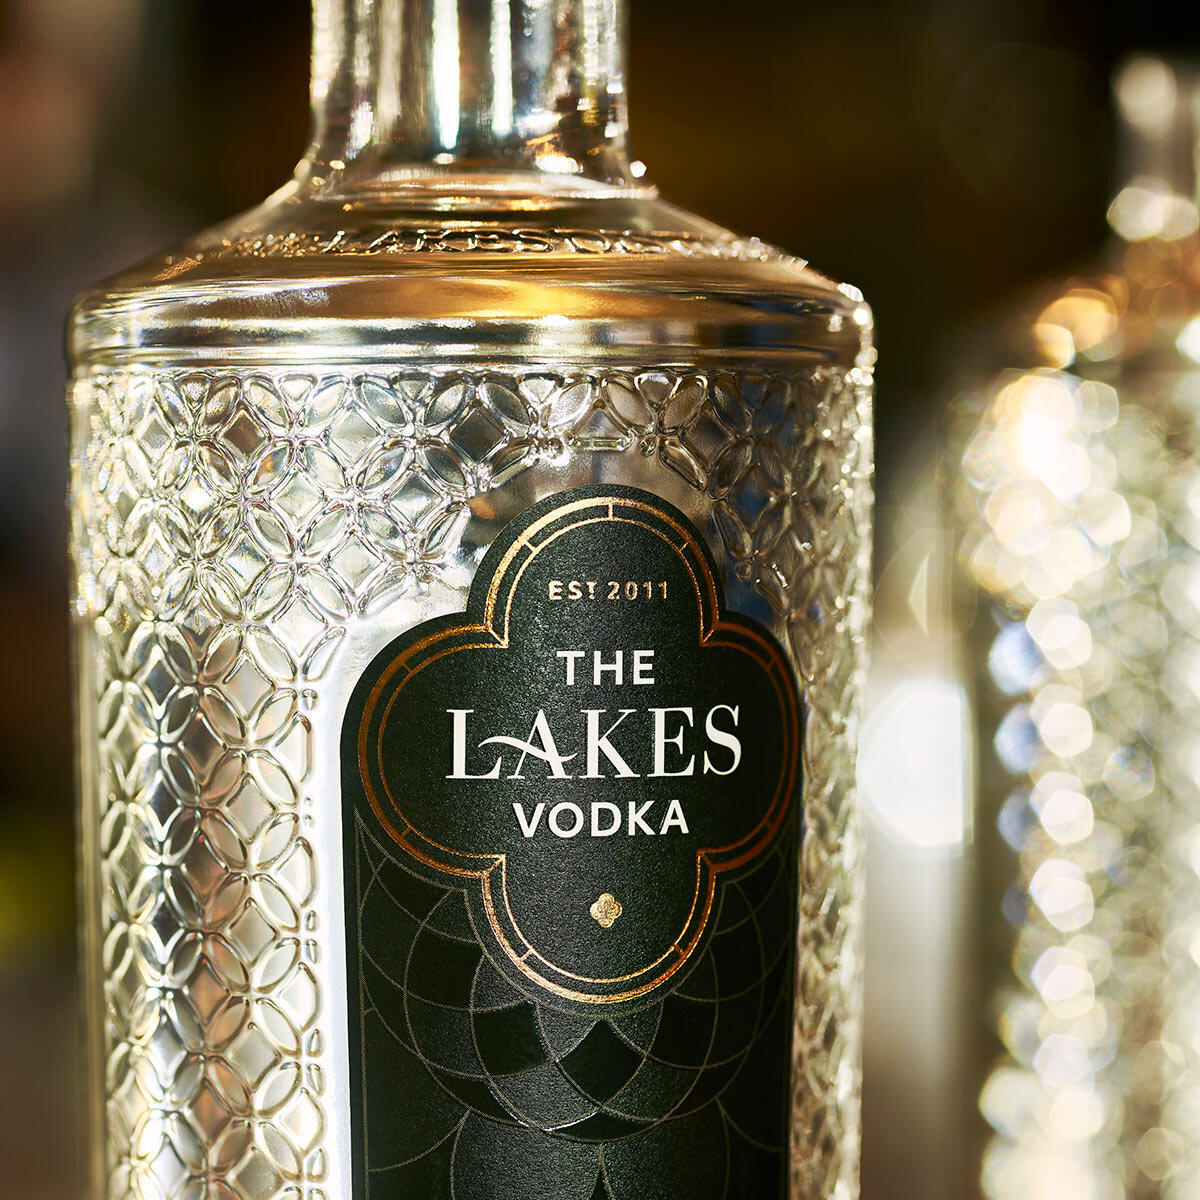 A close up of the lakes vodka logo